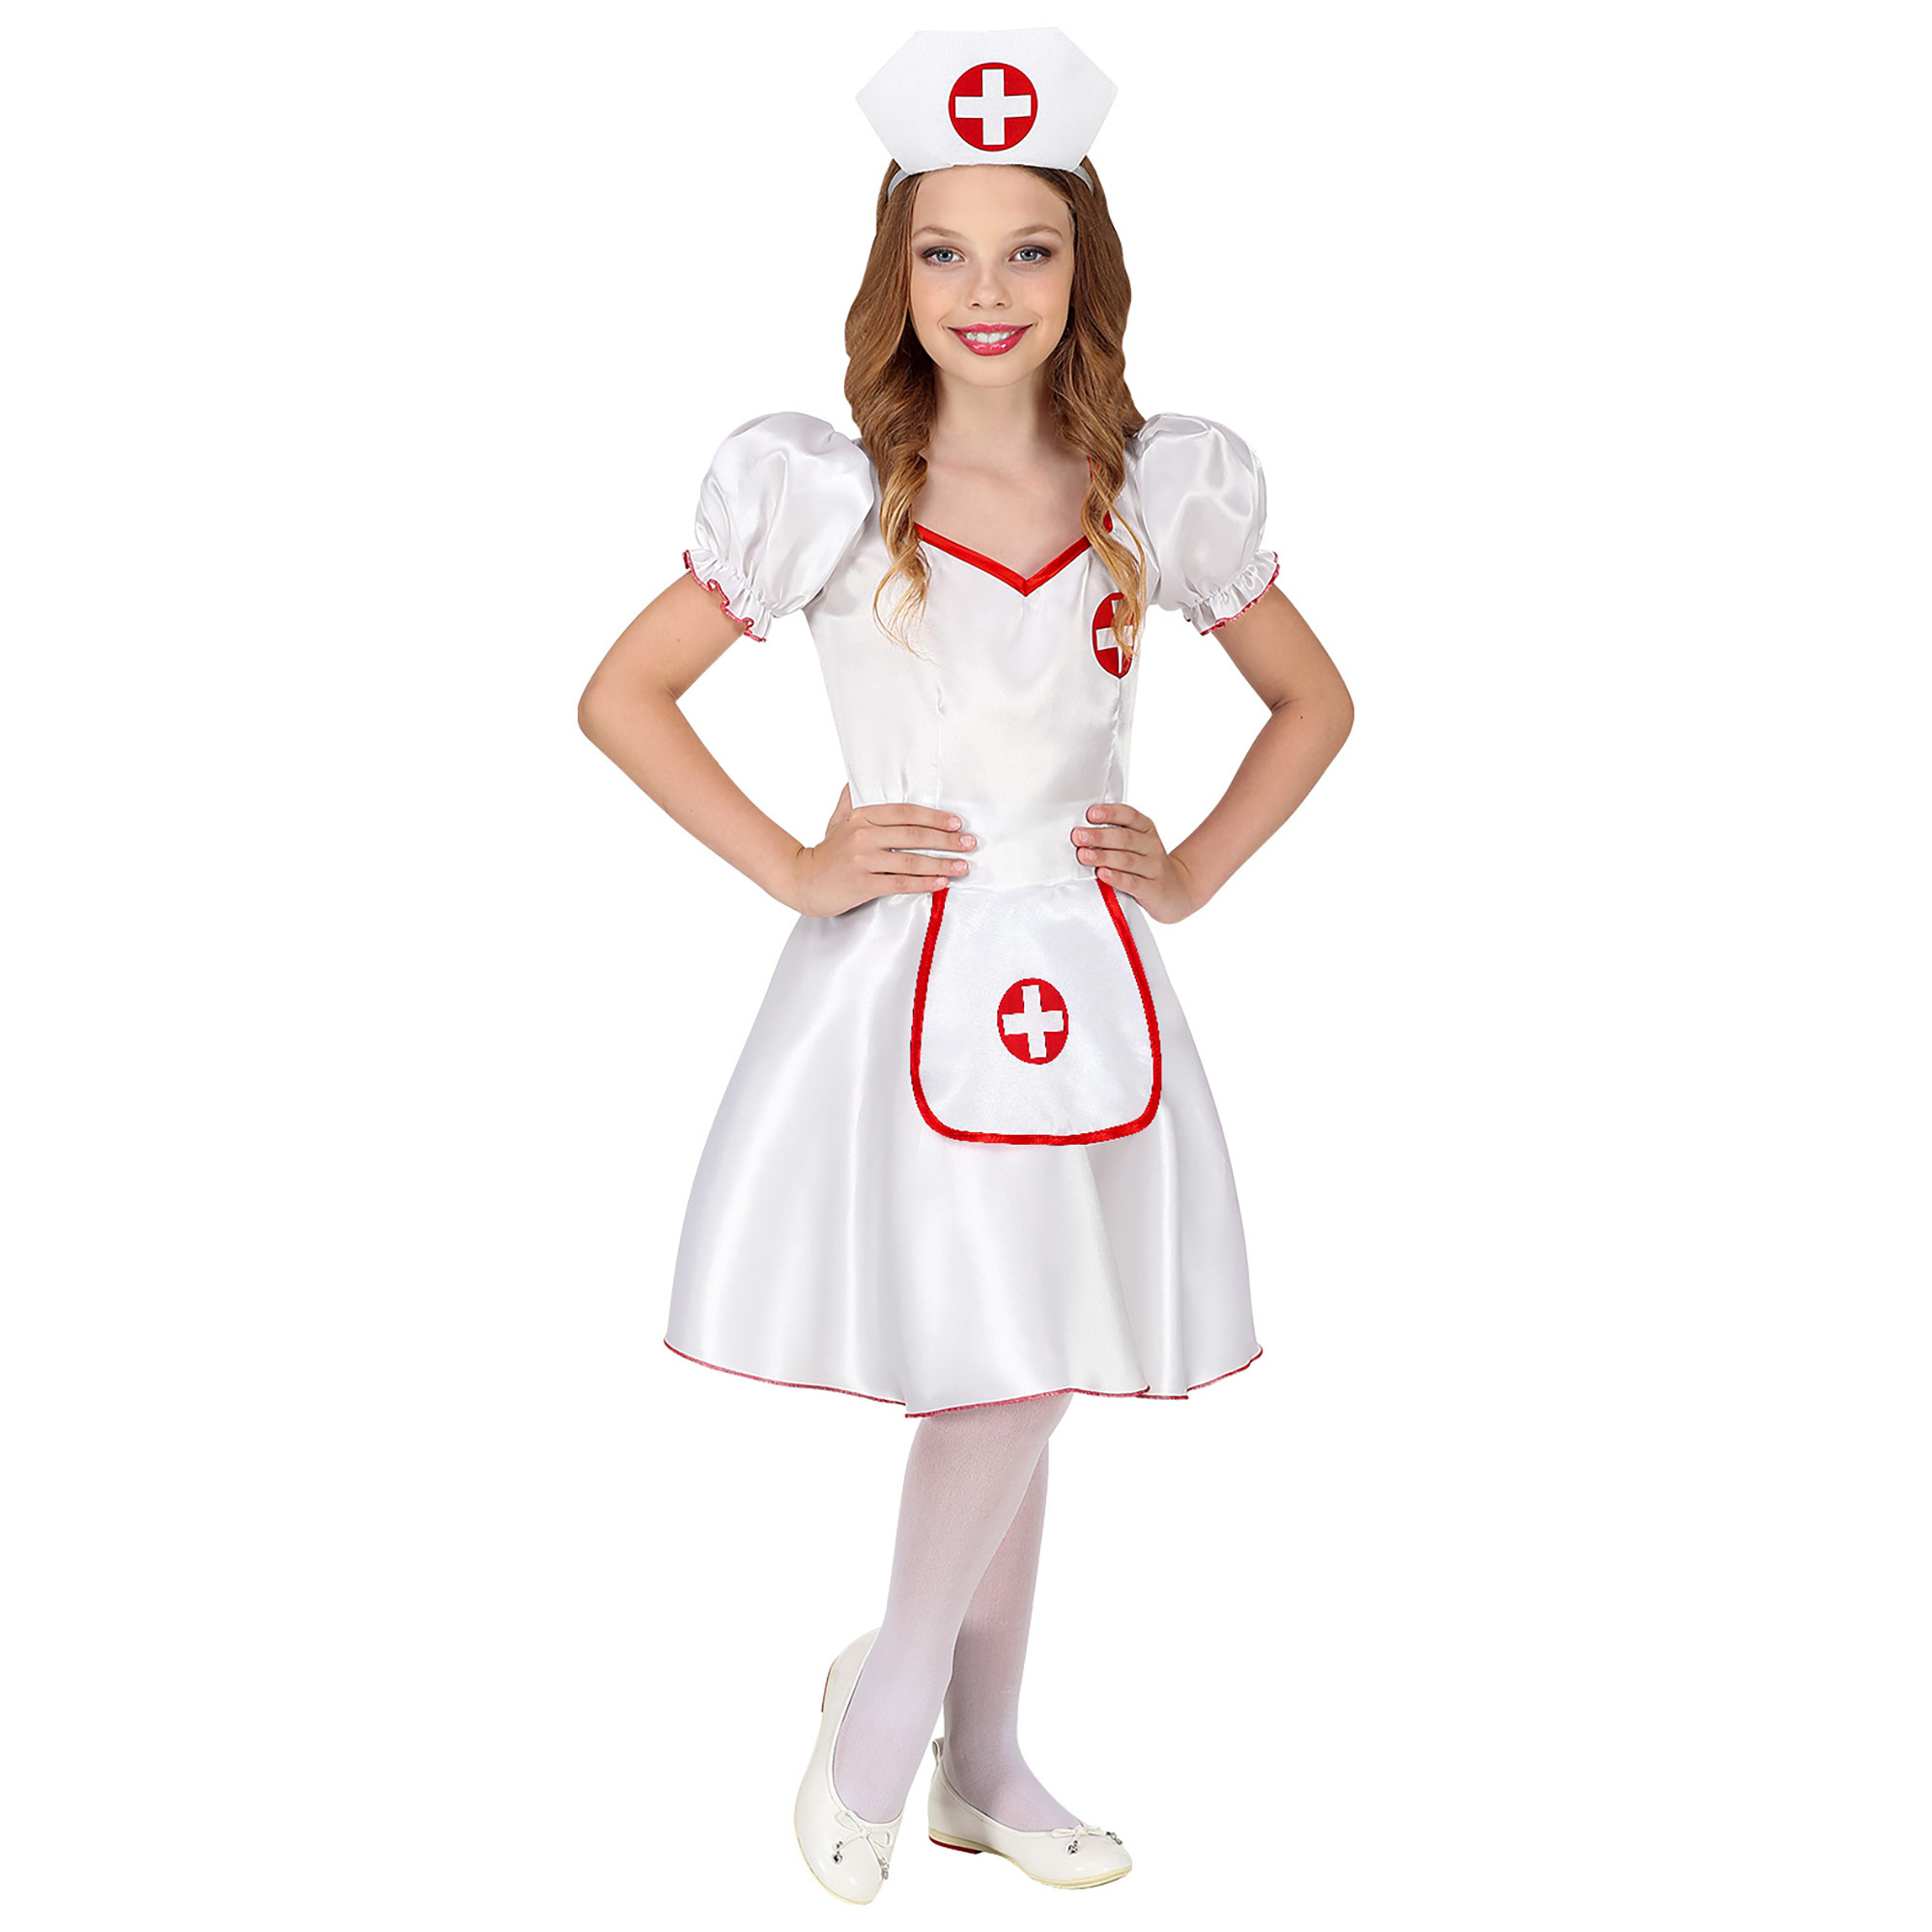 Mooie verpleegster jurk meisje kostuum zuster